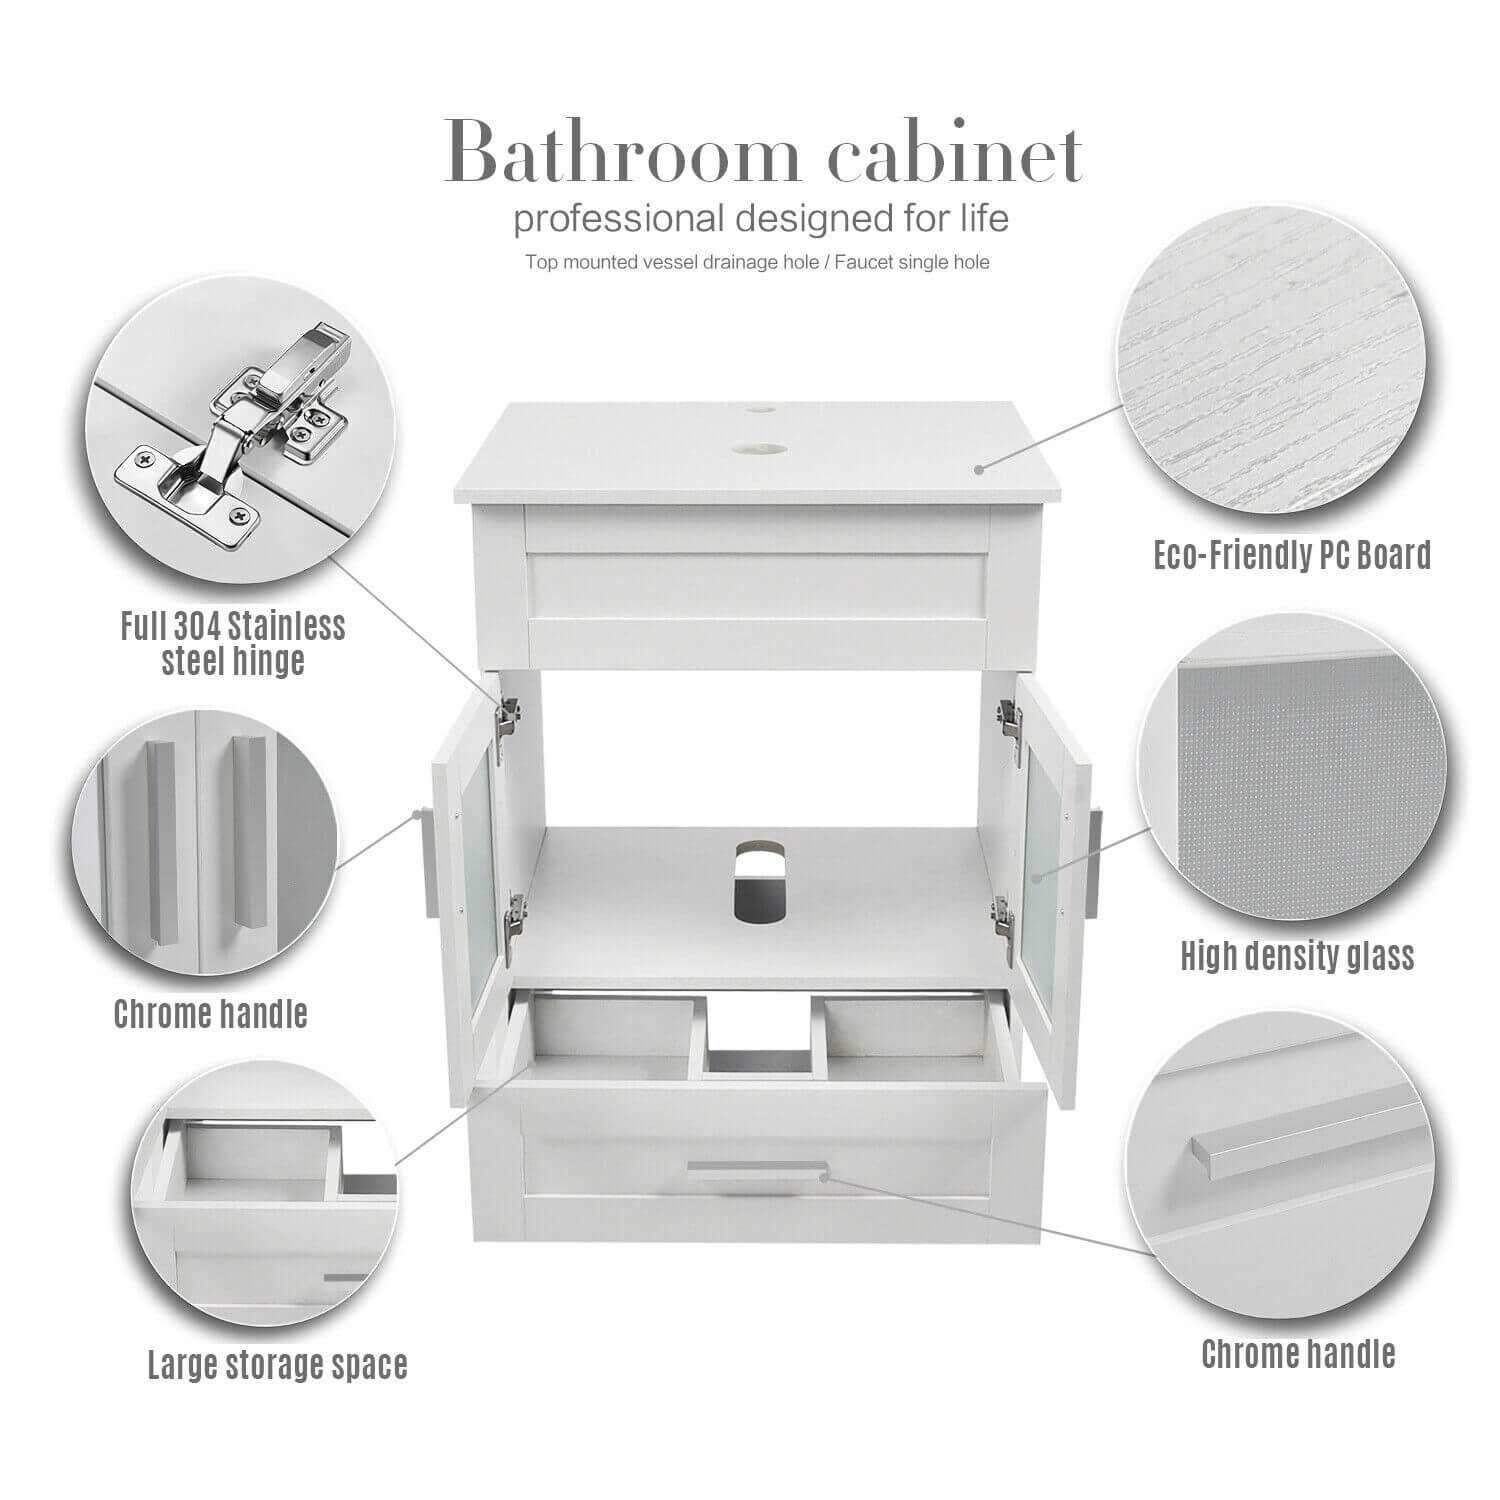 6 professional design points of Elecwish bathroom vanities 24" wood bathroom vanity stand pedestal cabinet